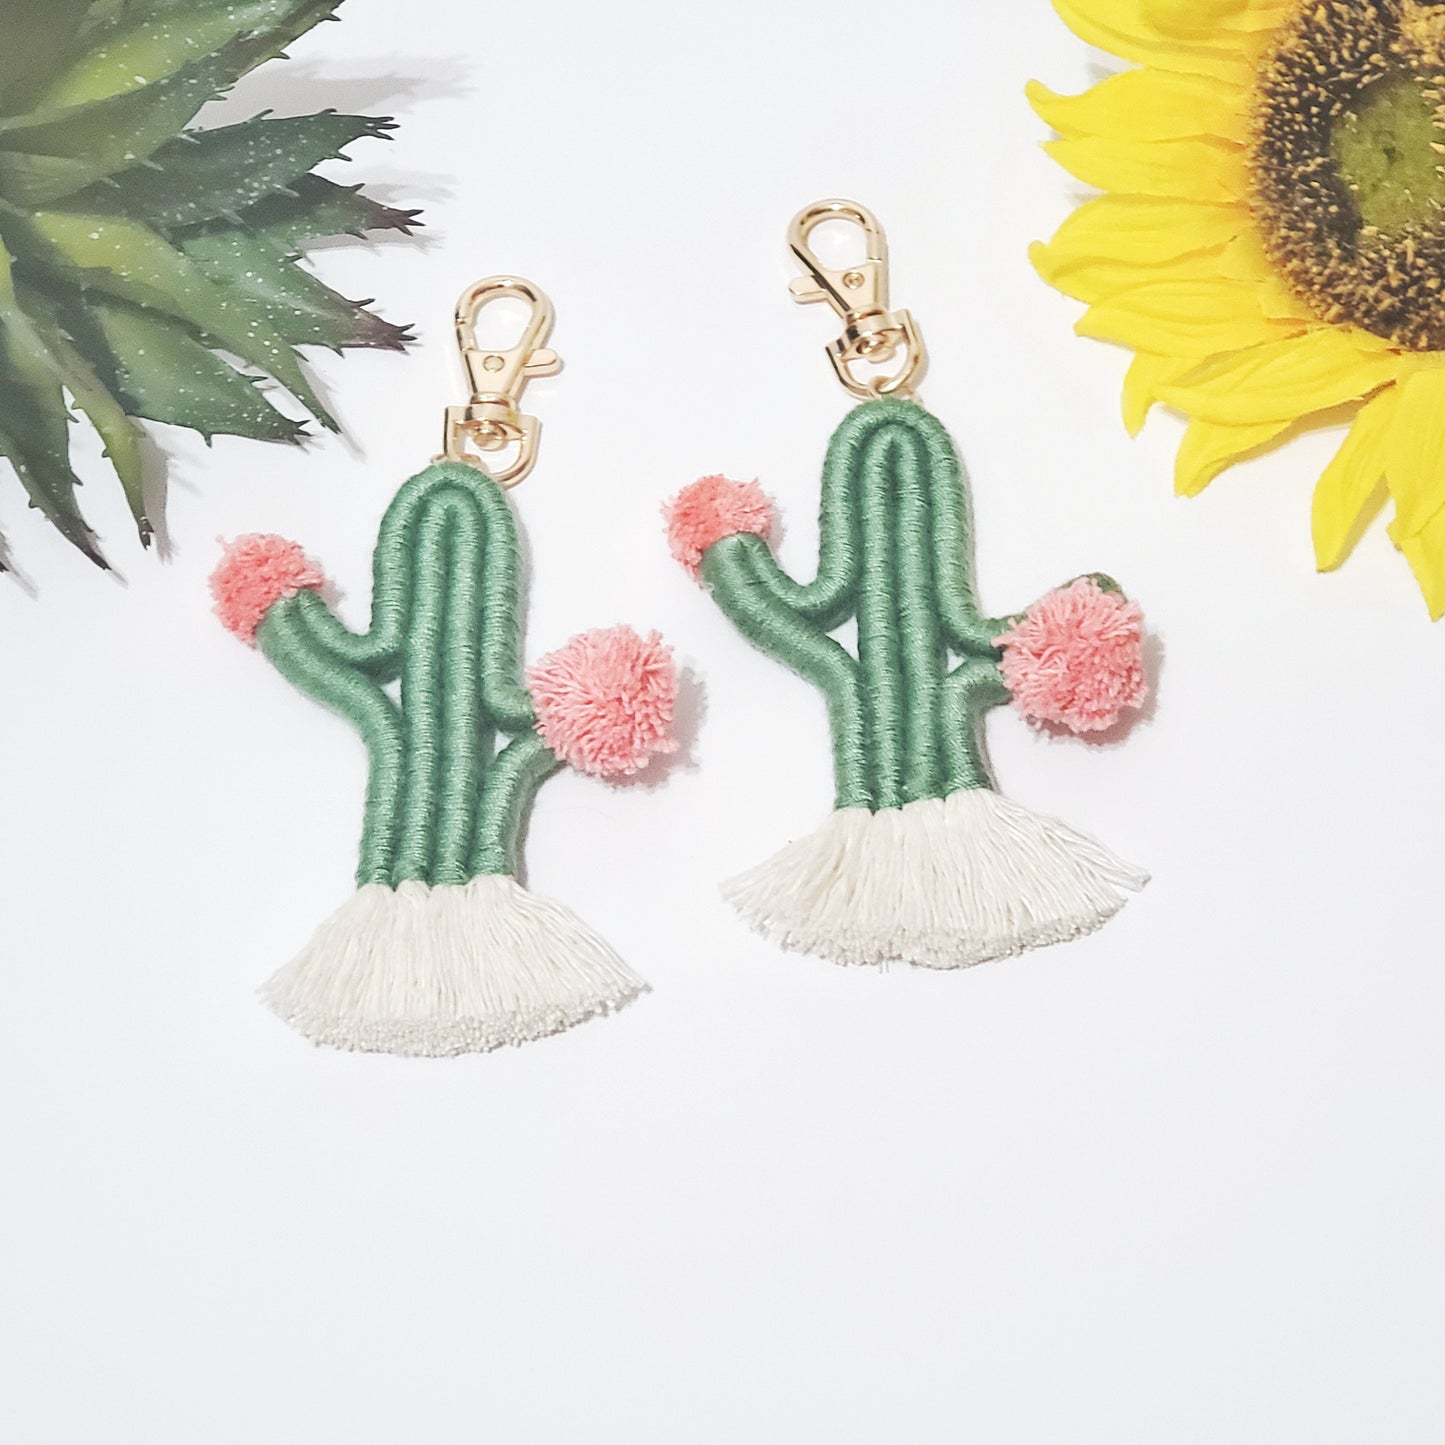 Handmade cactus keychains. boho desert style macrame keychain gift for her.